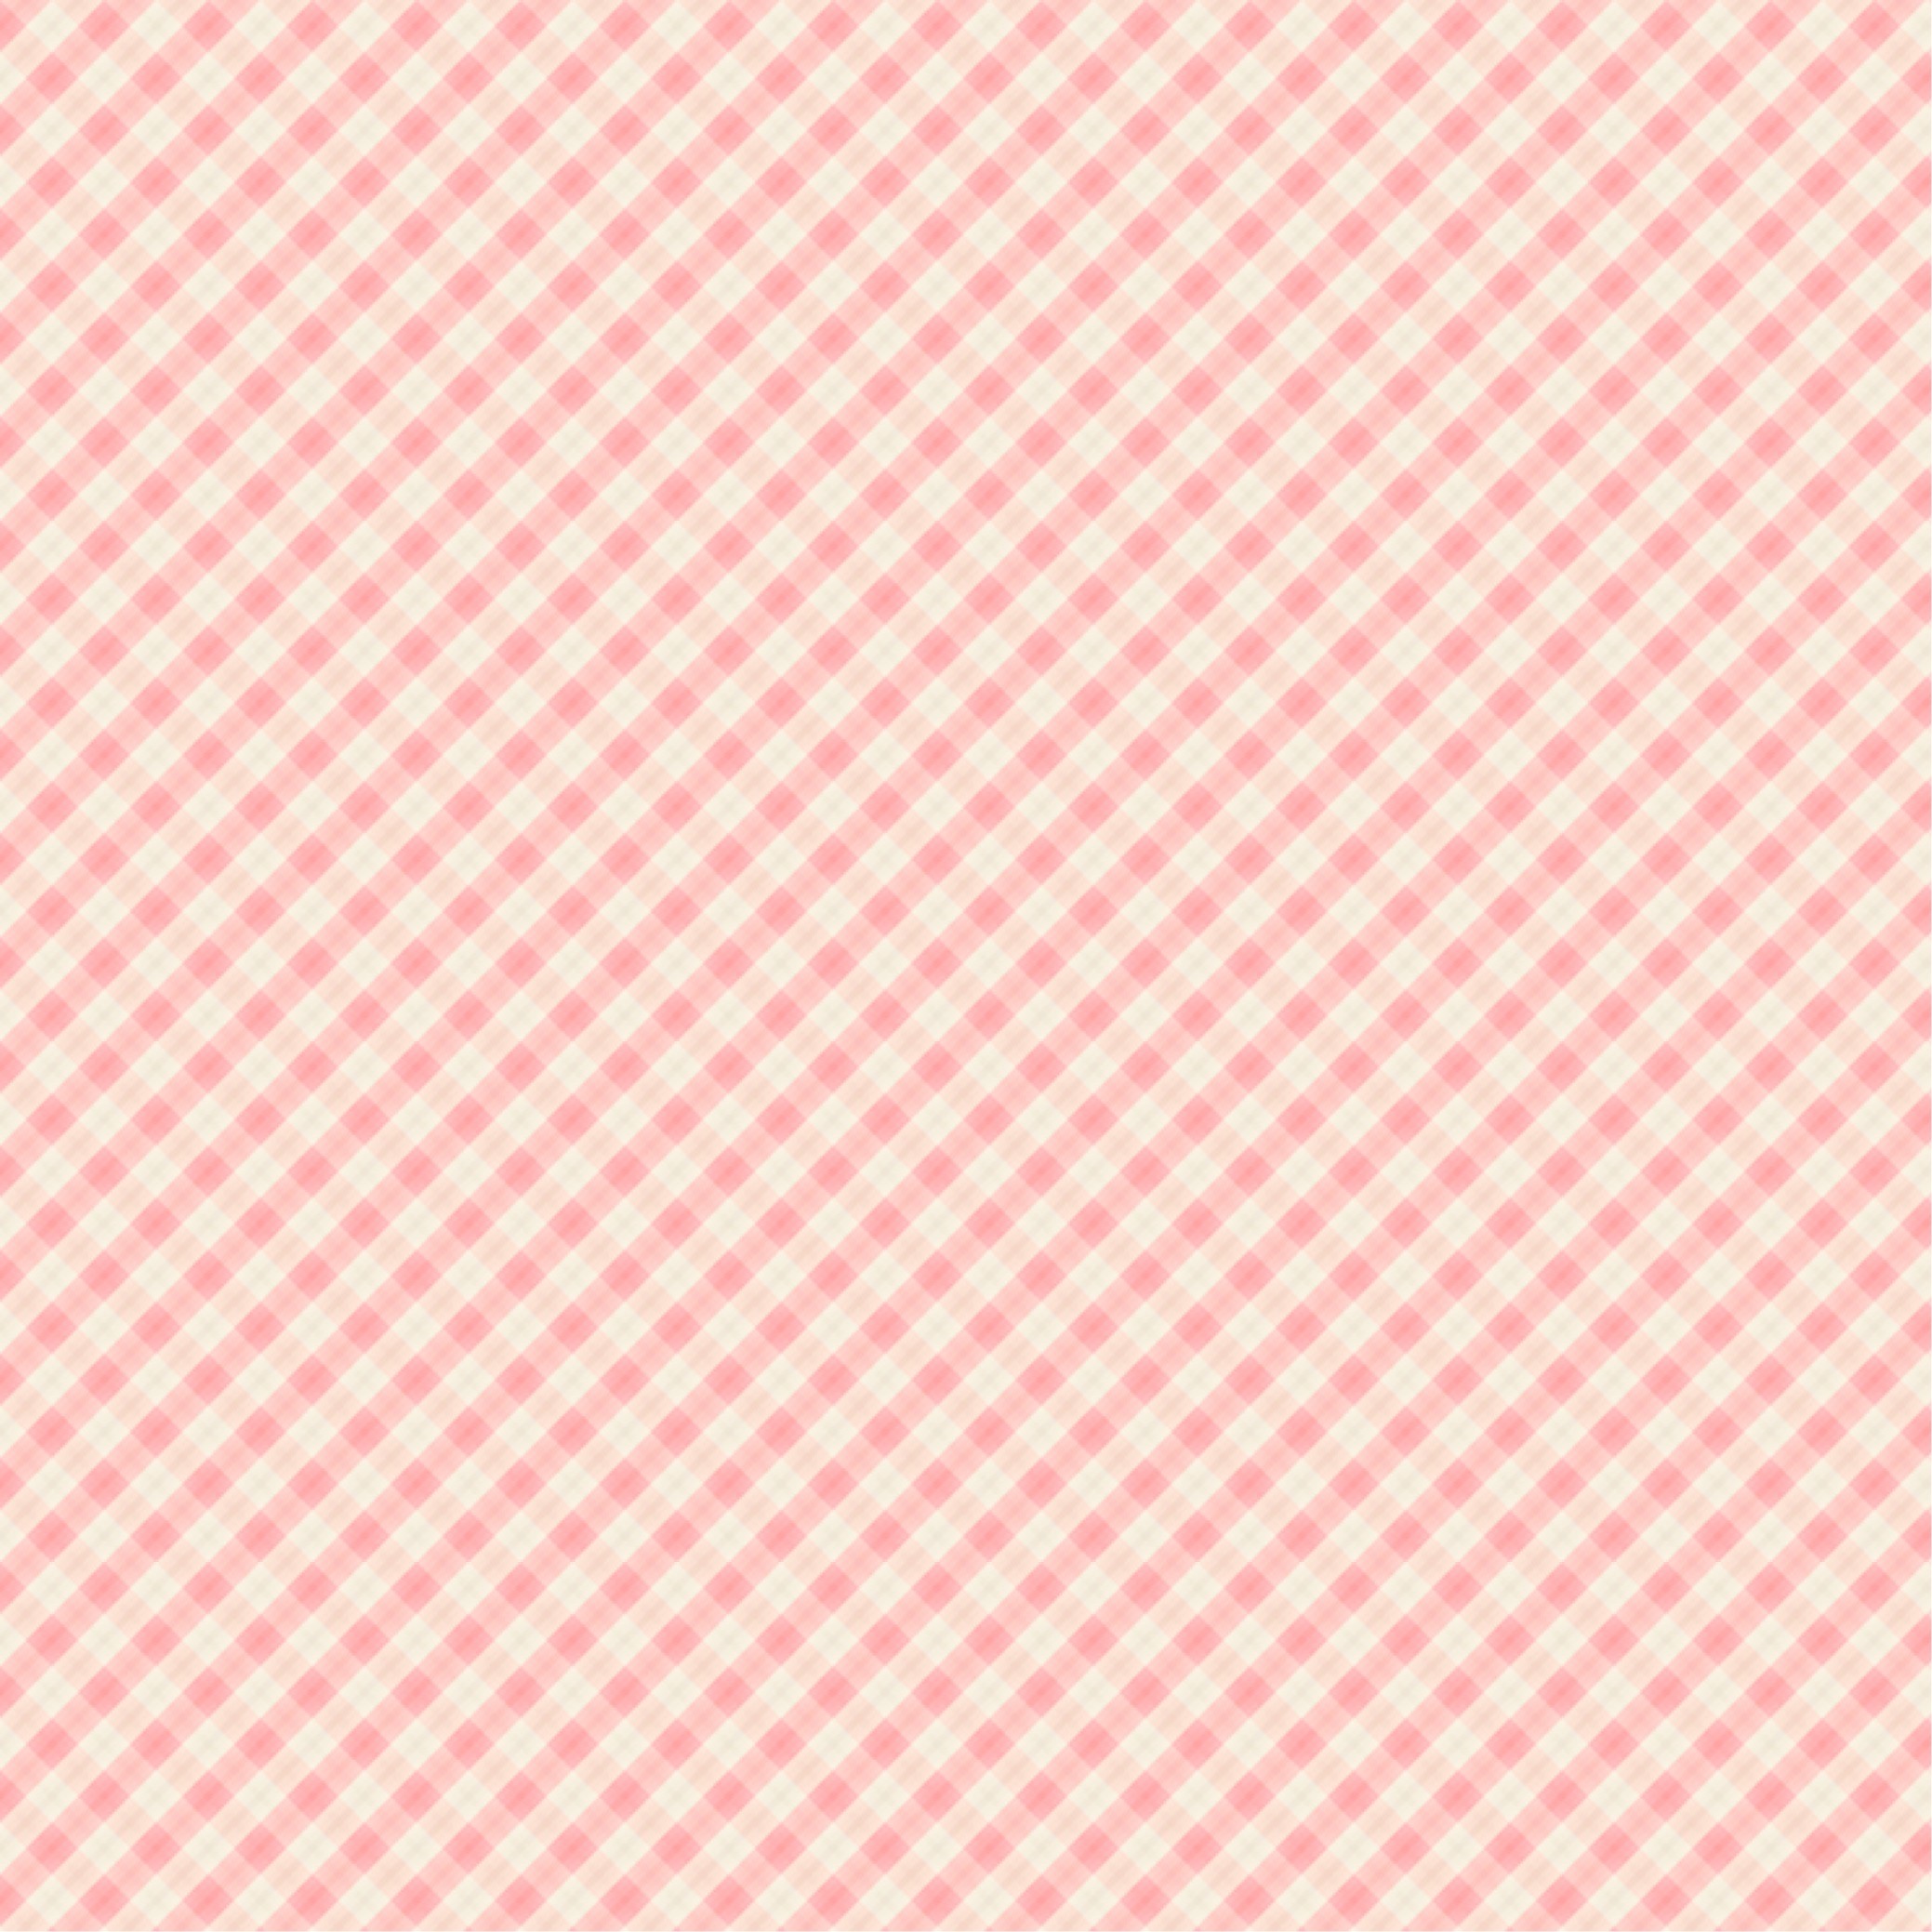 2078x2078 Pink & Off White Plaid Wallpaper